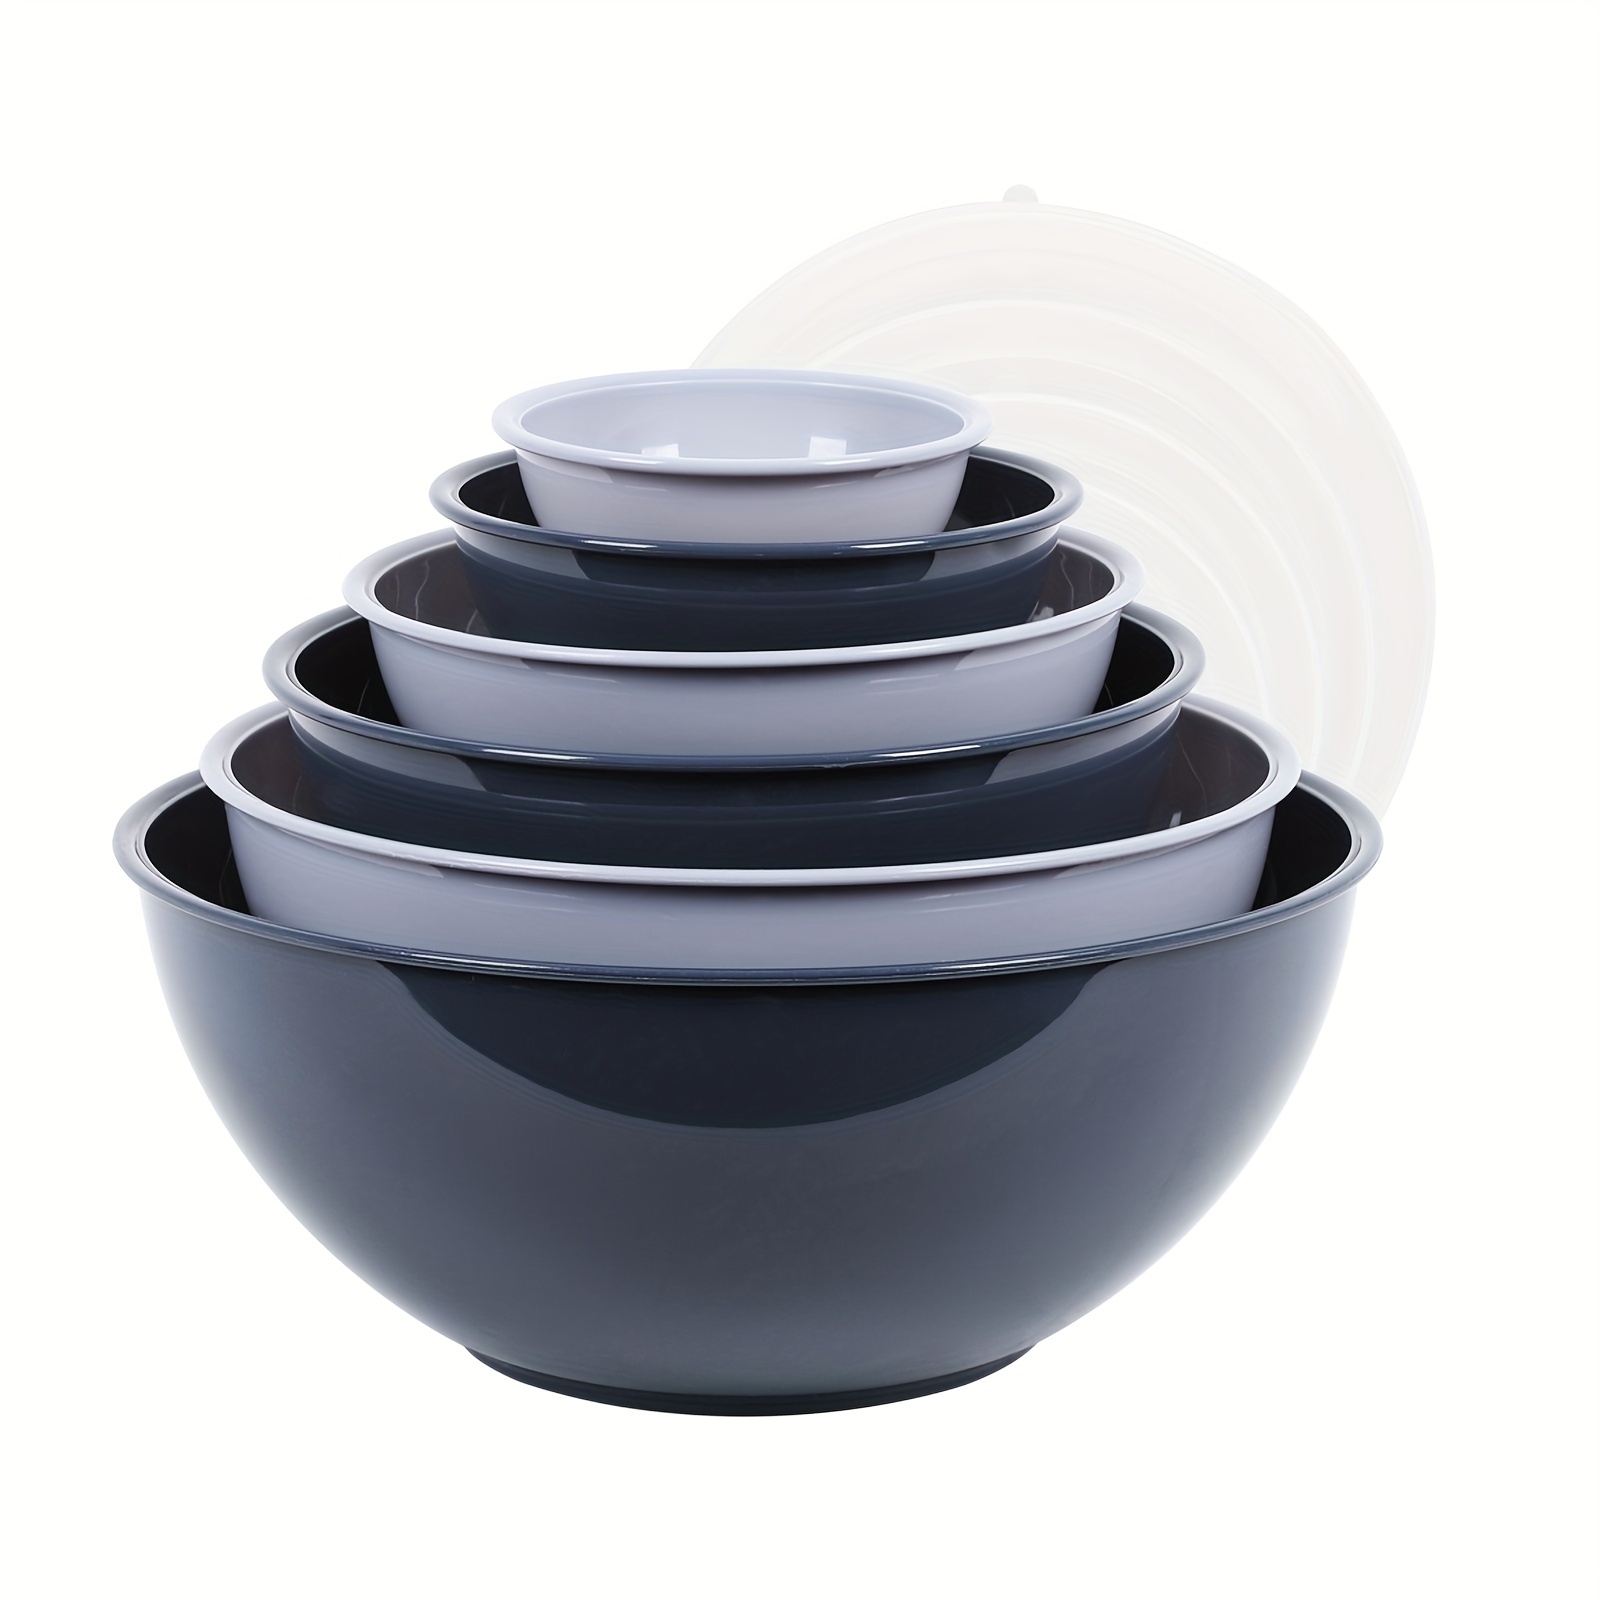 Round Nesting Mixing Bowl Set with Lids - Set of 4 Bowls for Food Prep, Serving, Salad, Storage, Snacks | BPA-Free, Microwave Safe Bowls